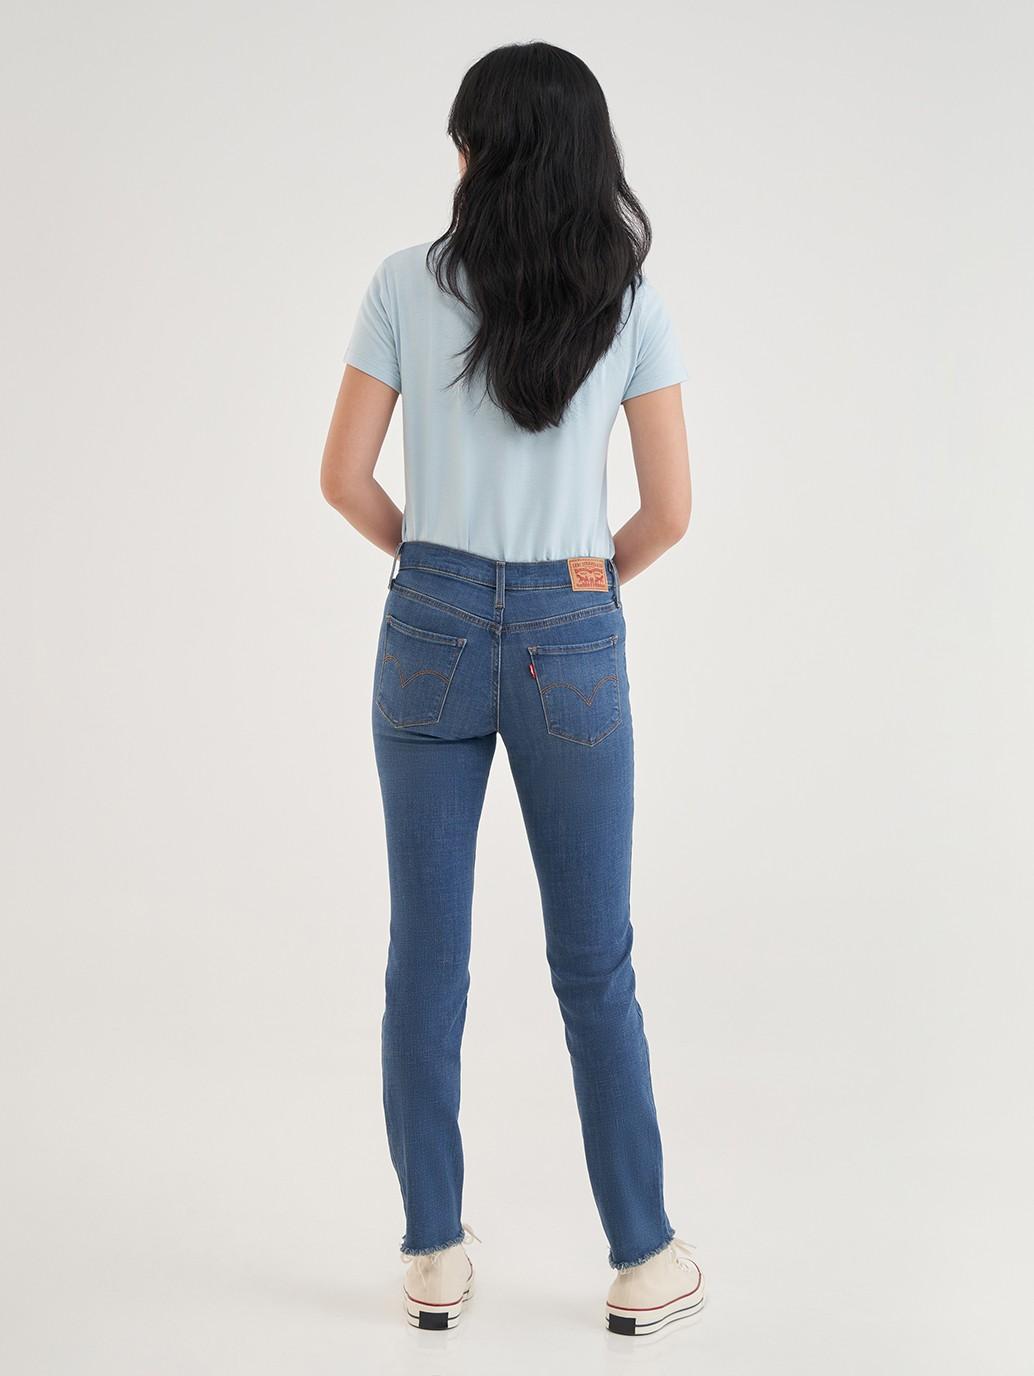 Buy Levi's® Women's 312 Shaping Slim Jeans | Levi’s Official Online ...